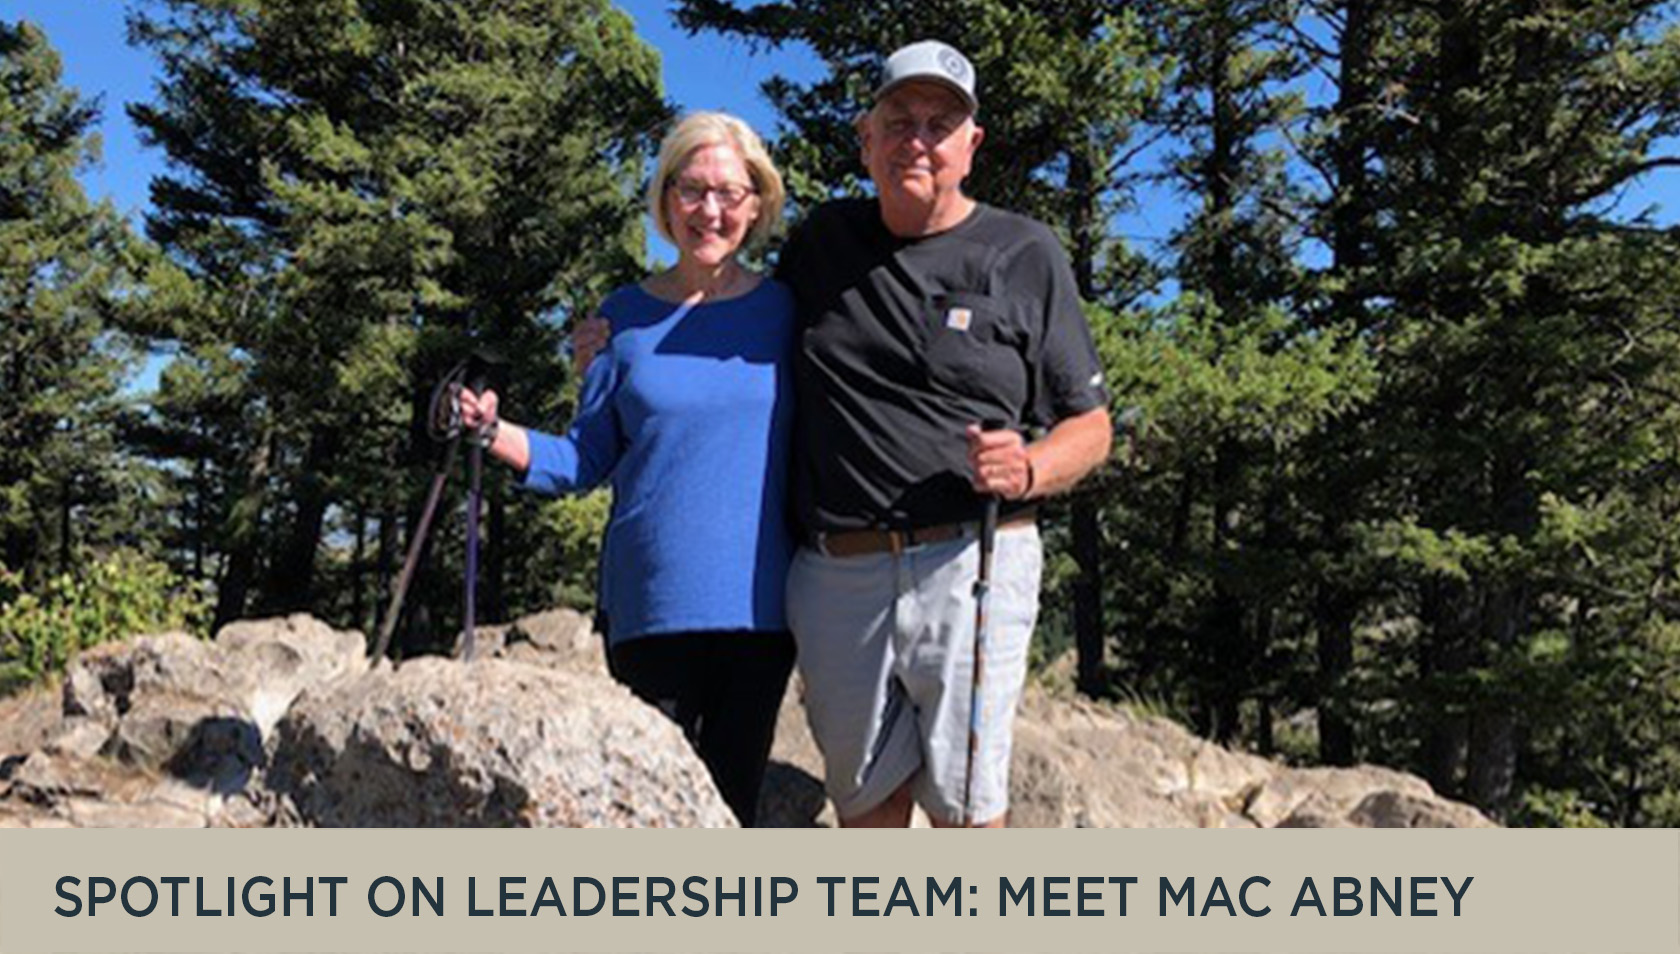 Story #4: Spotlight on Leadership Team: Meet Mac Abney